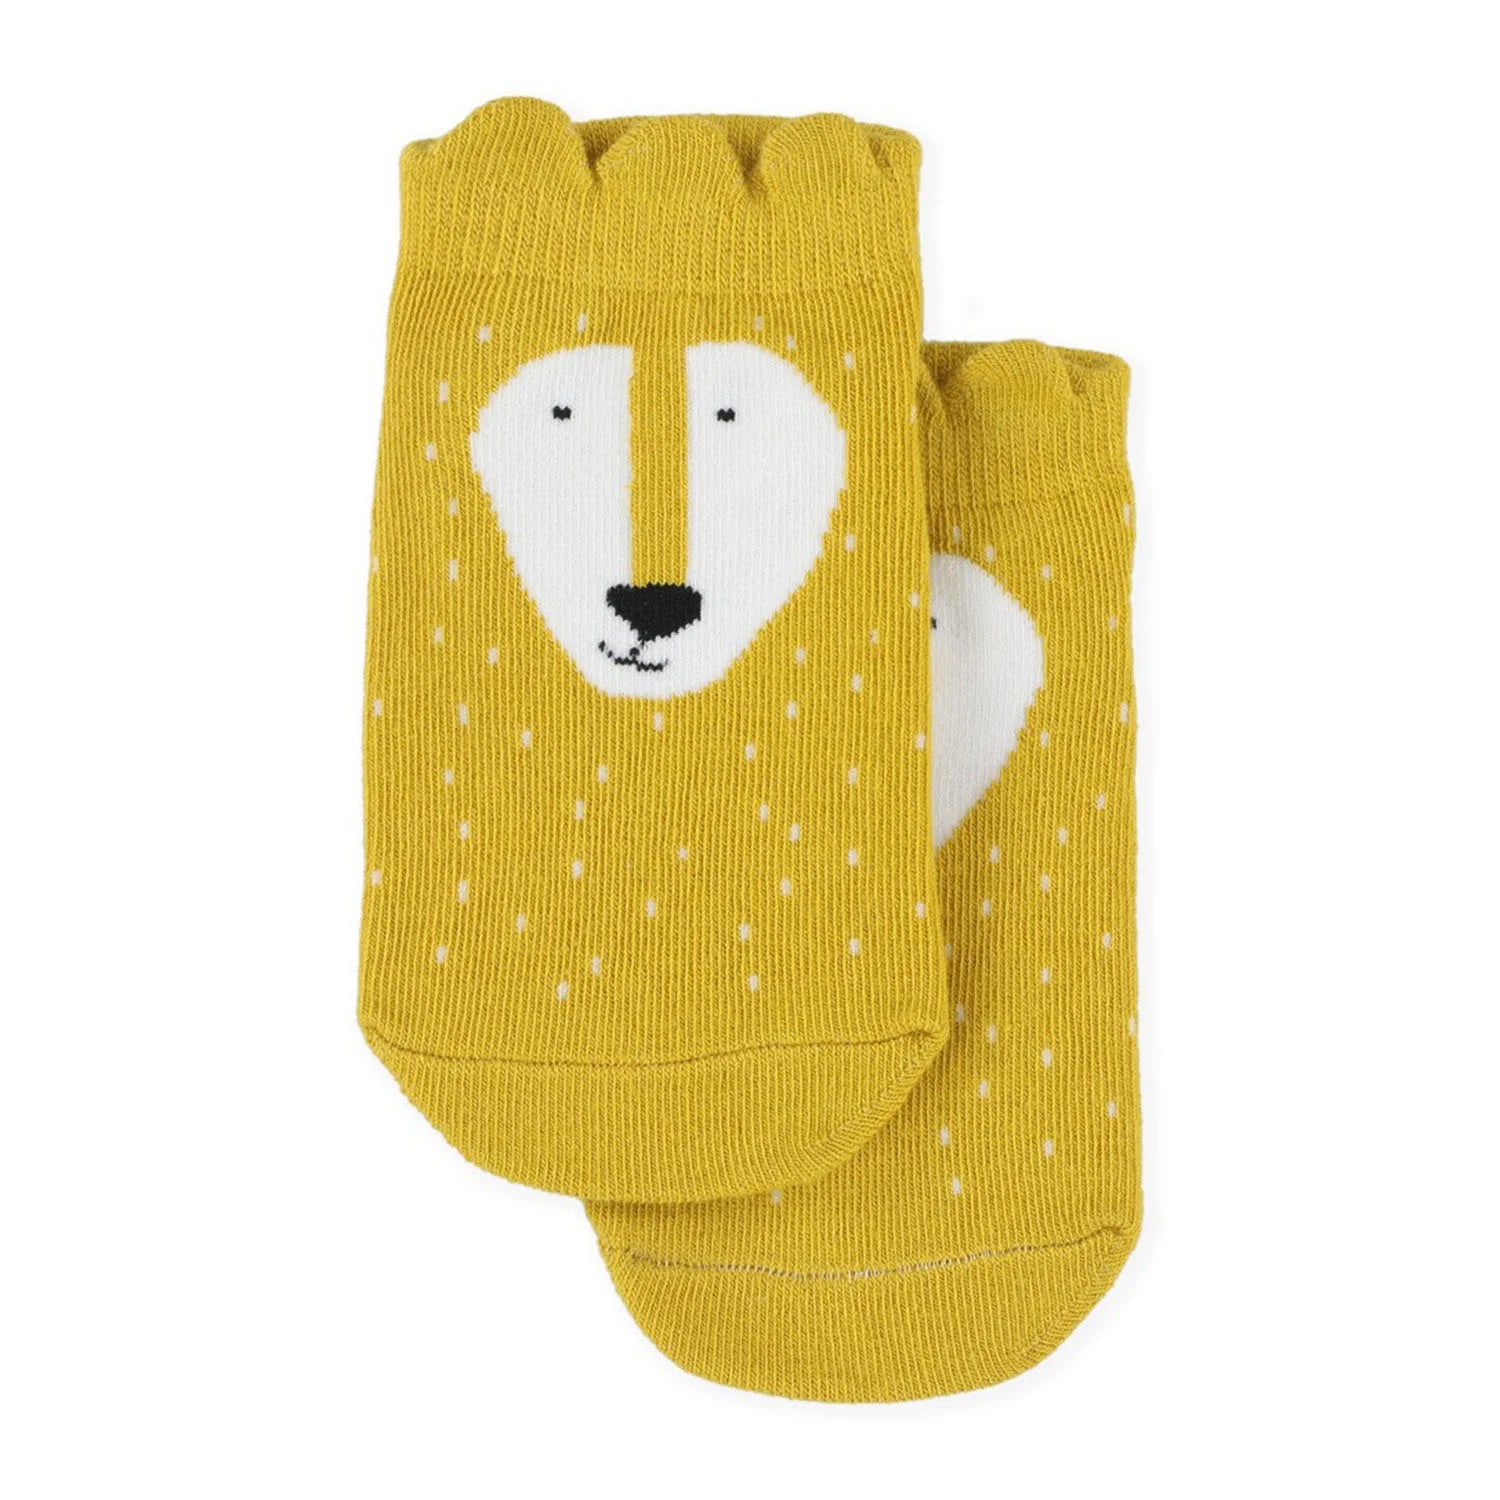 An image of Kids Socks - 2 Pack Socks - Mr Lion Socks | Trixie 22/24